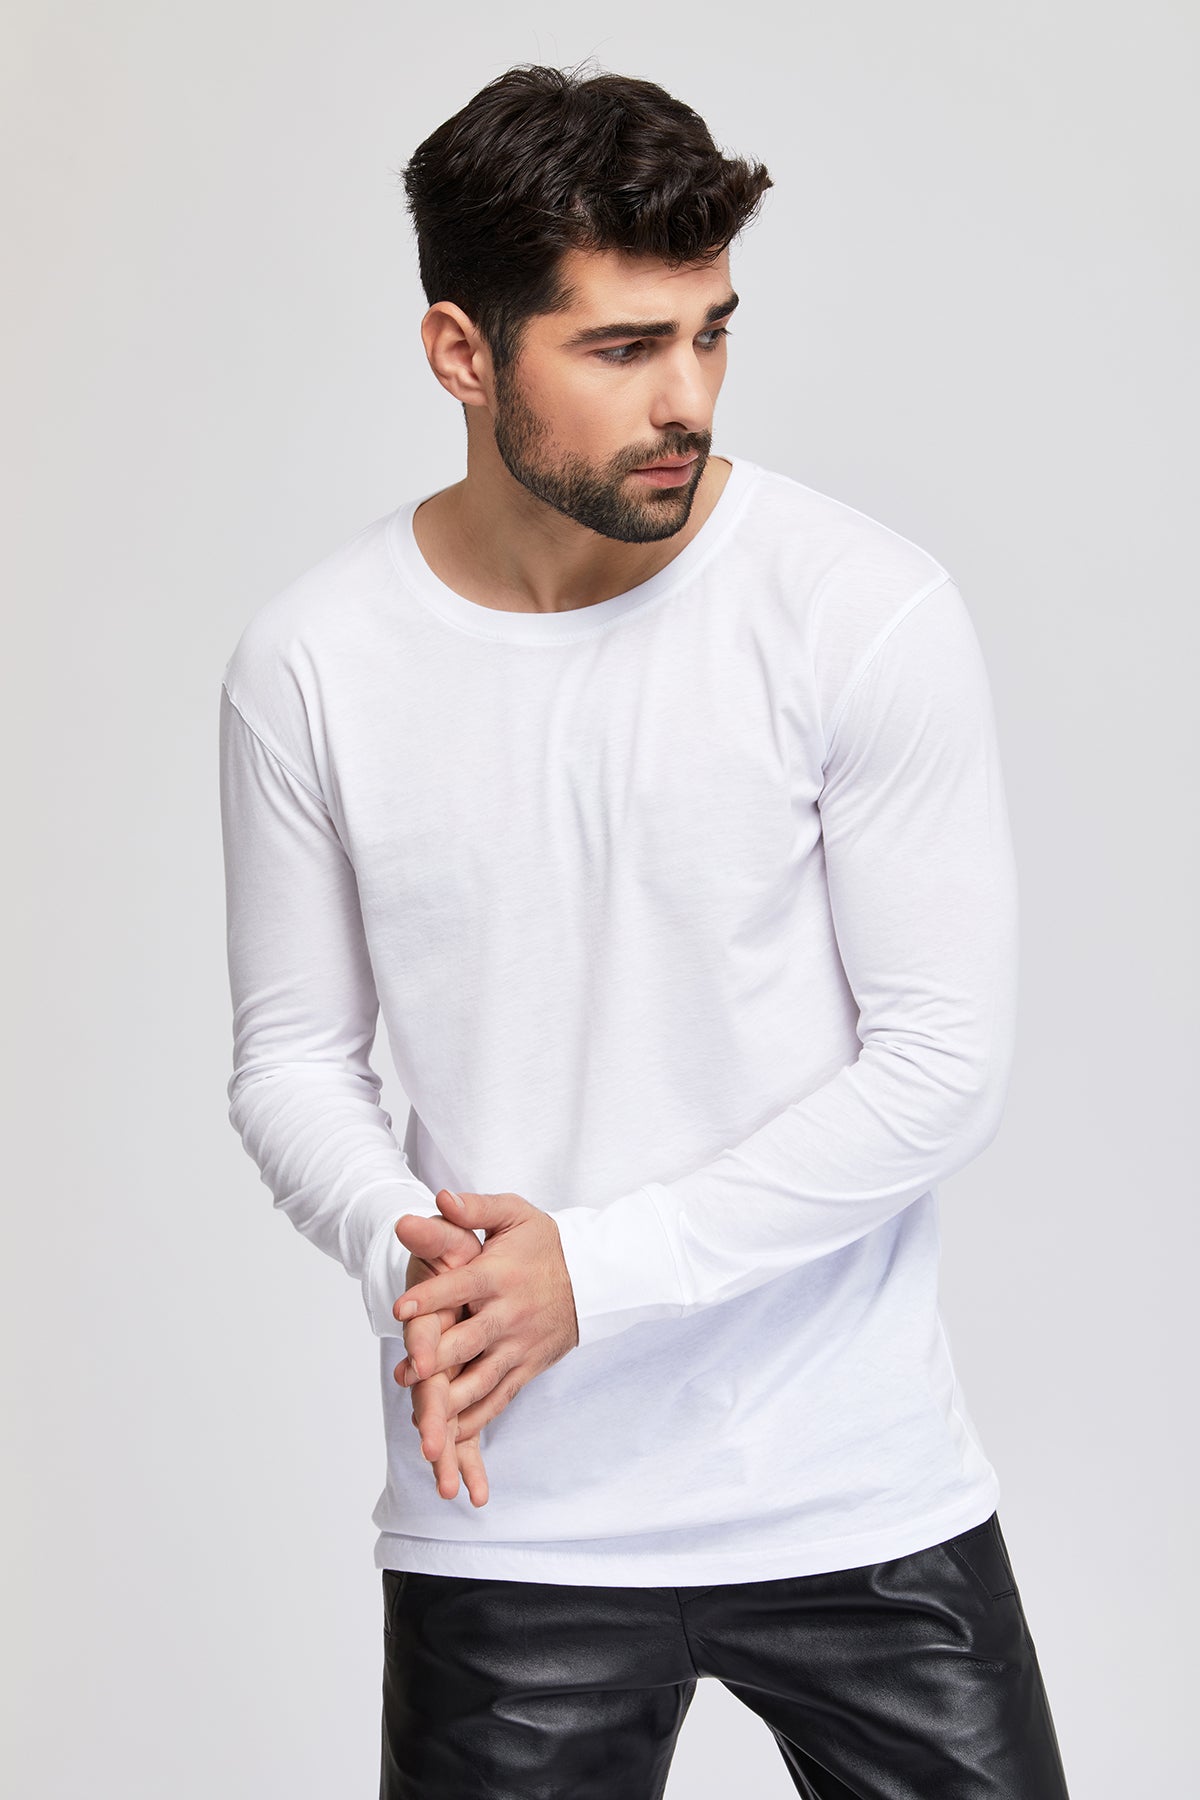 Men's long sleeve t-shirts 100 % great quality Turkish Pima cotton preshrunk. Winter, cold weather essentials. Preshrunk.